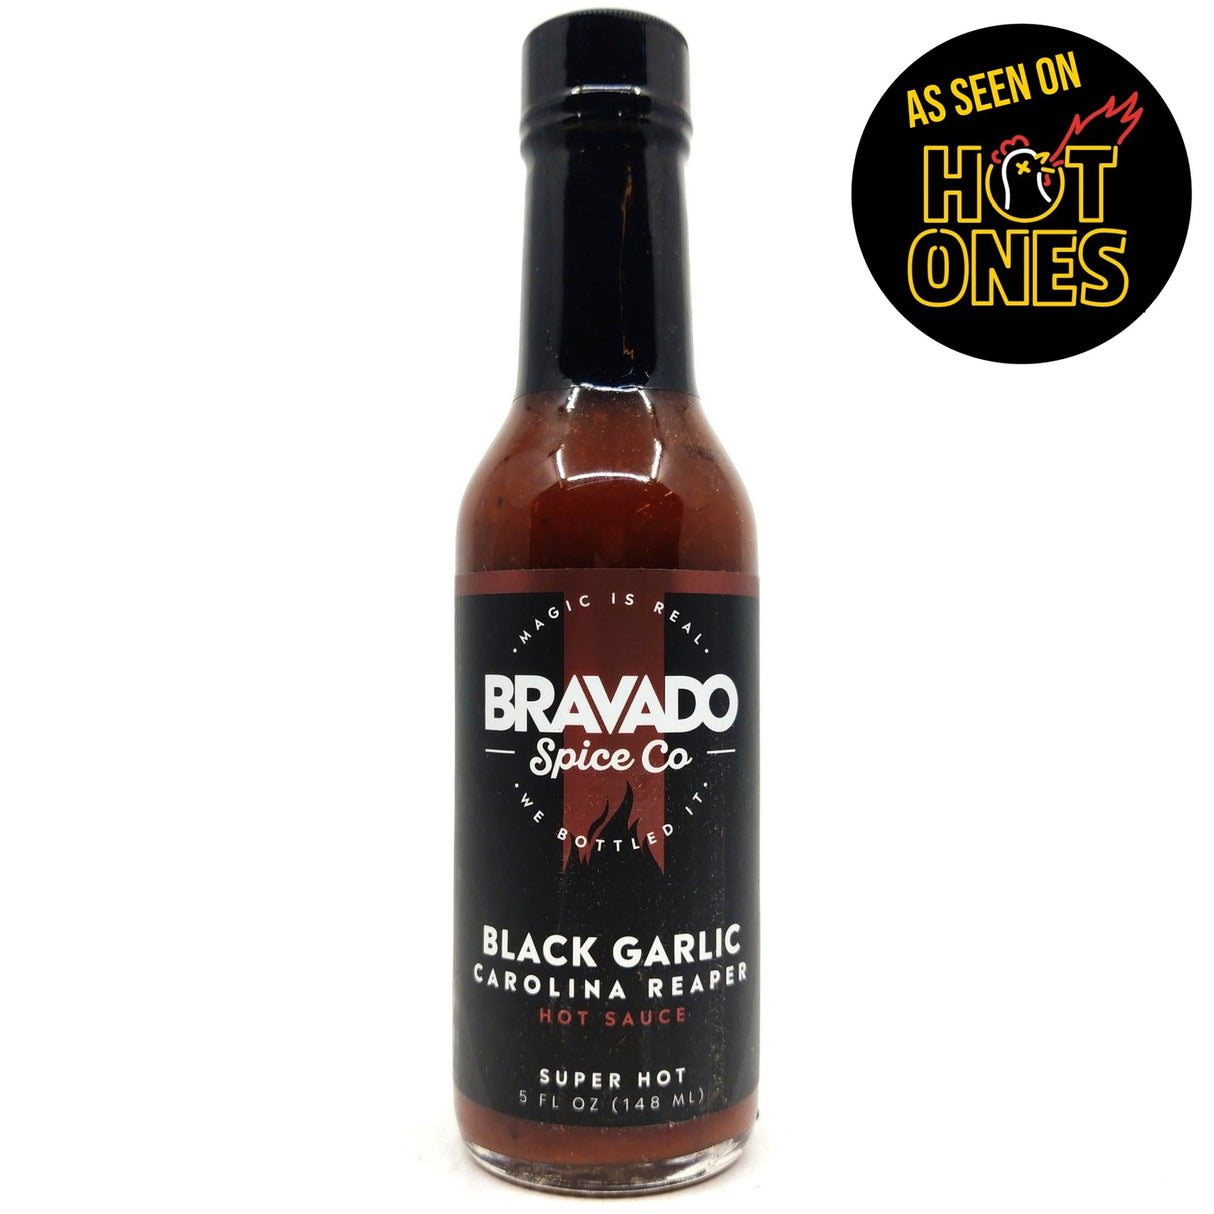 Bravado Black Garlic Carolina Reaper Hot Sauce (148ml)-Hop Burns & Black